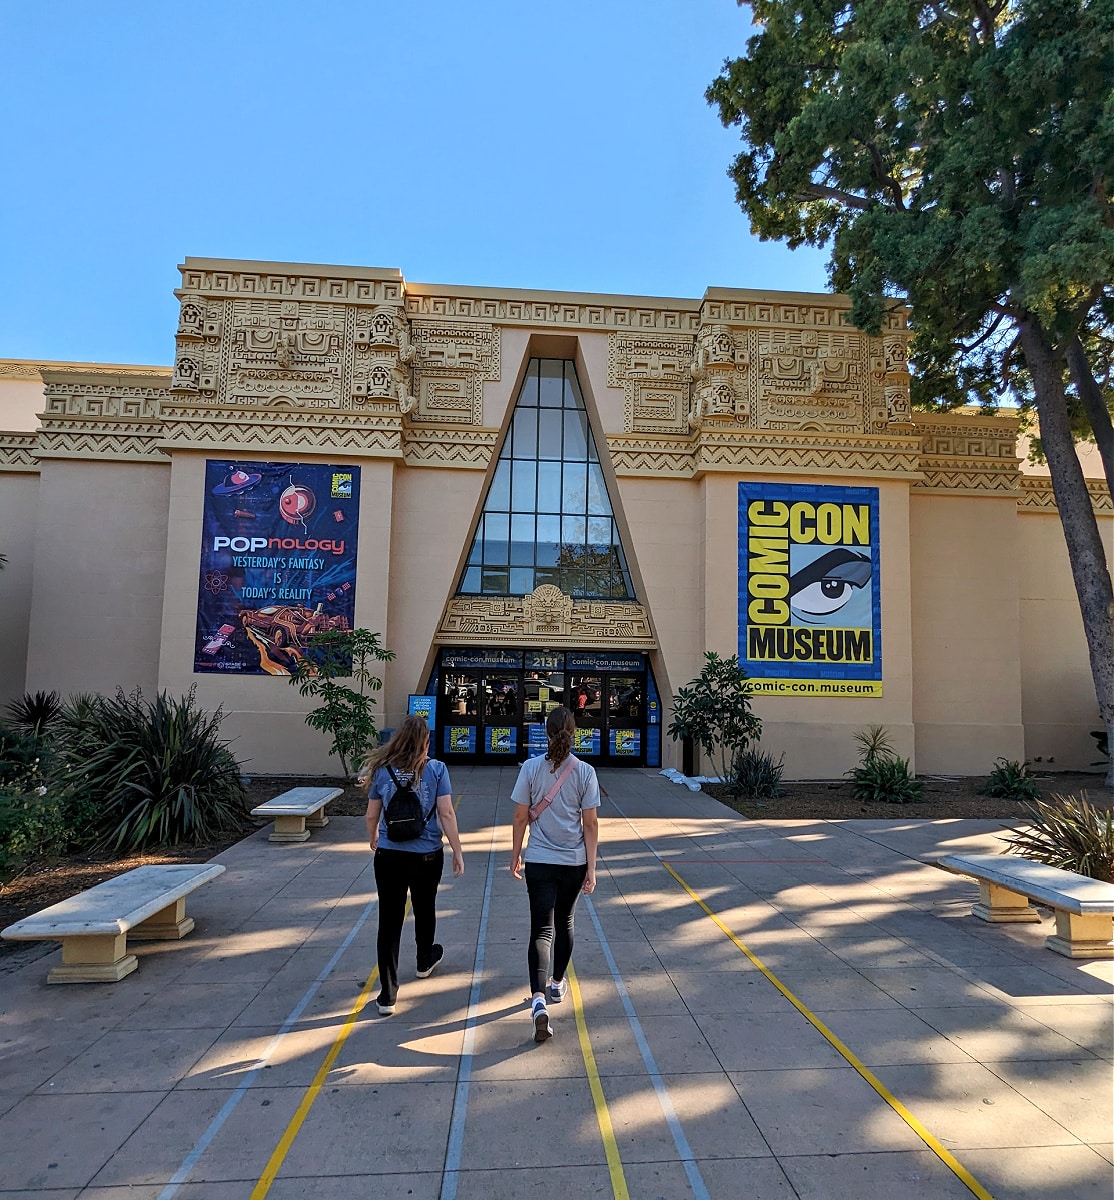 ComicCon Museum at Balboa Park